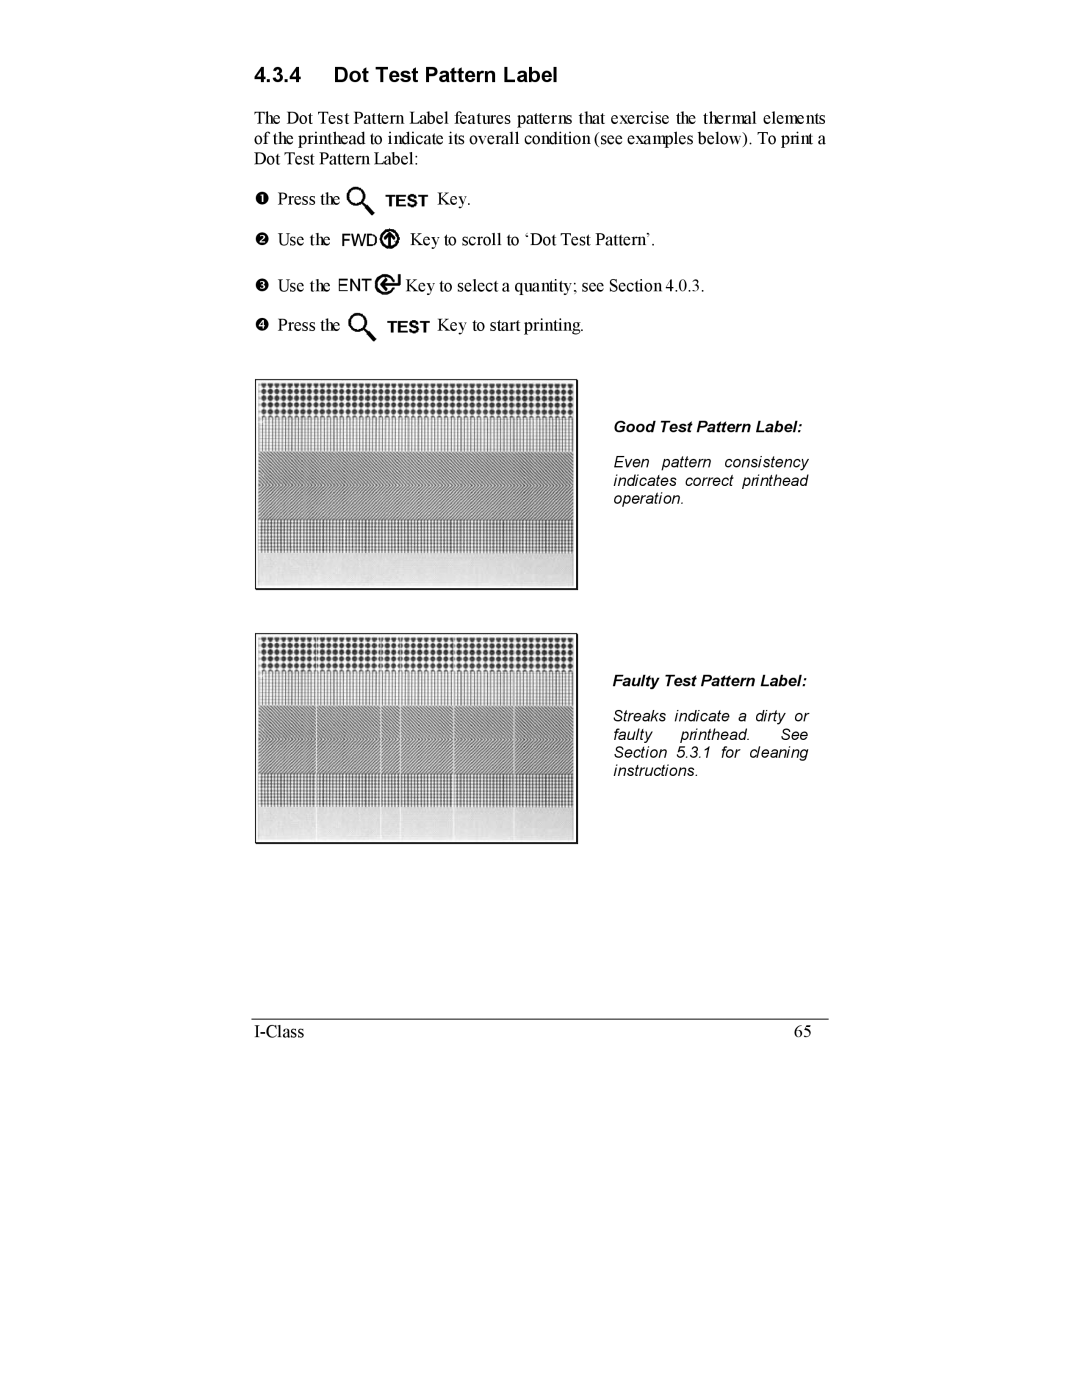 Datamax I-4208, I-4206 manual Dot Test Pattern Label 